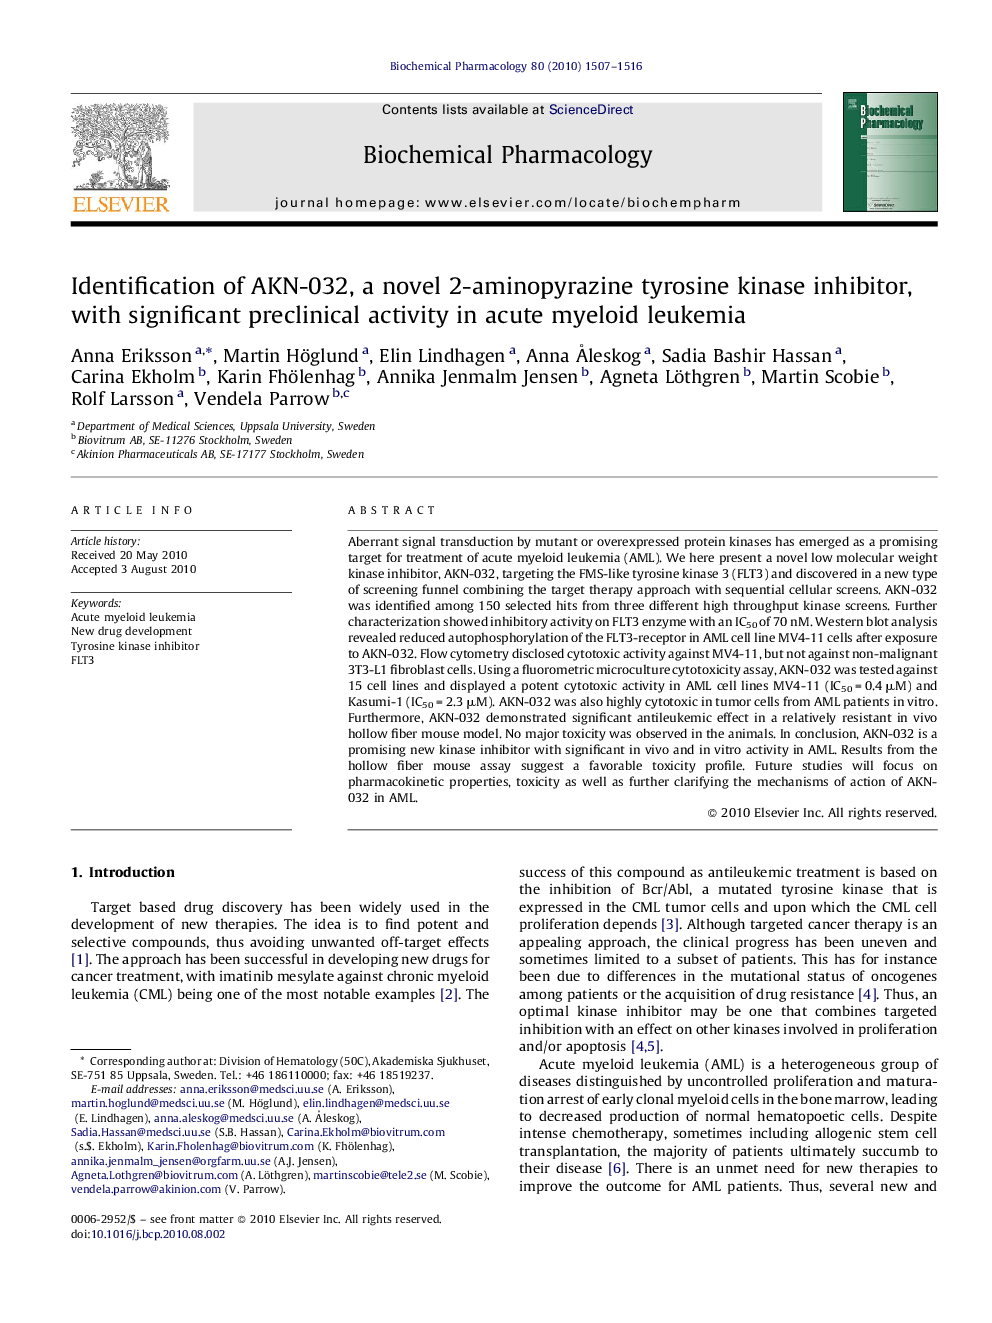 Identification of AKN-032, a novel 2-aminopyrazine tyrosine kinase inhibitor, with significant preclinical activity in acute myeloid leukemia